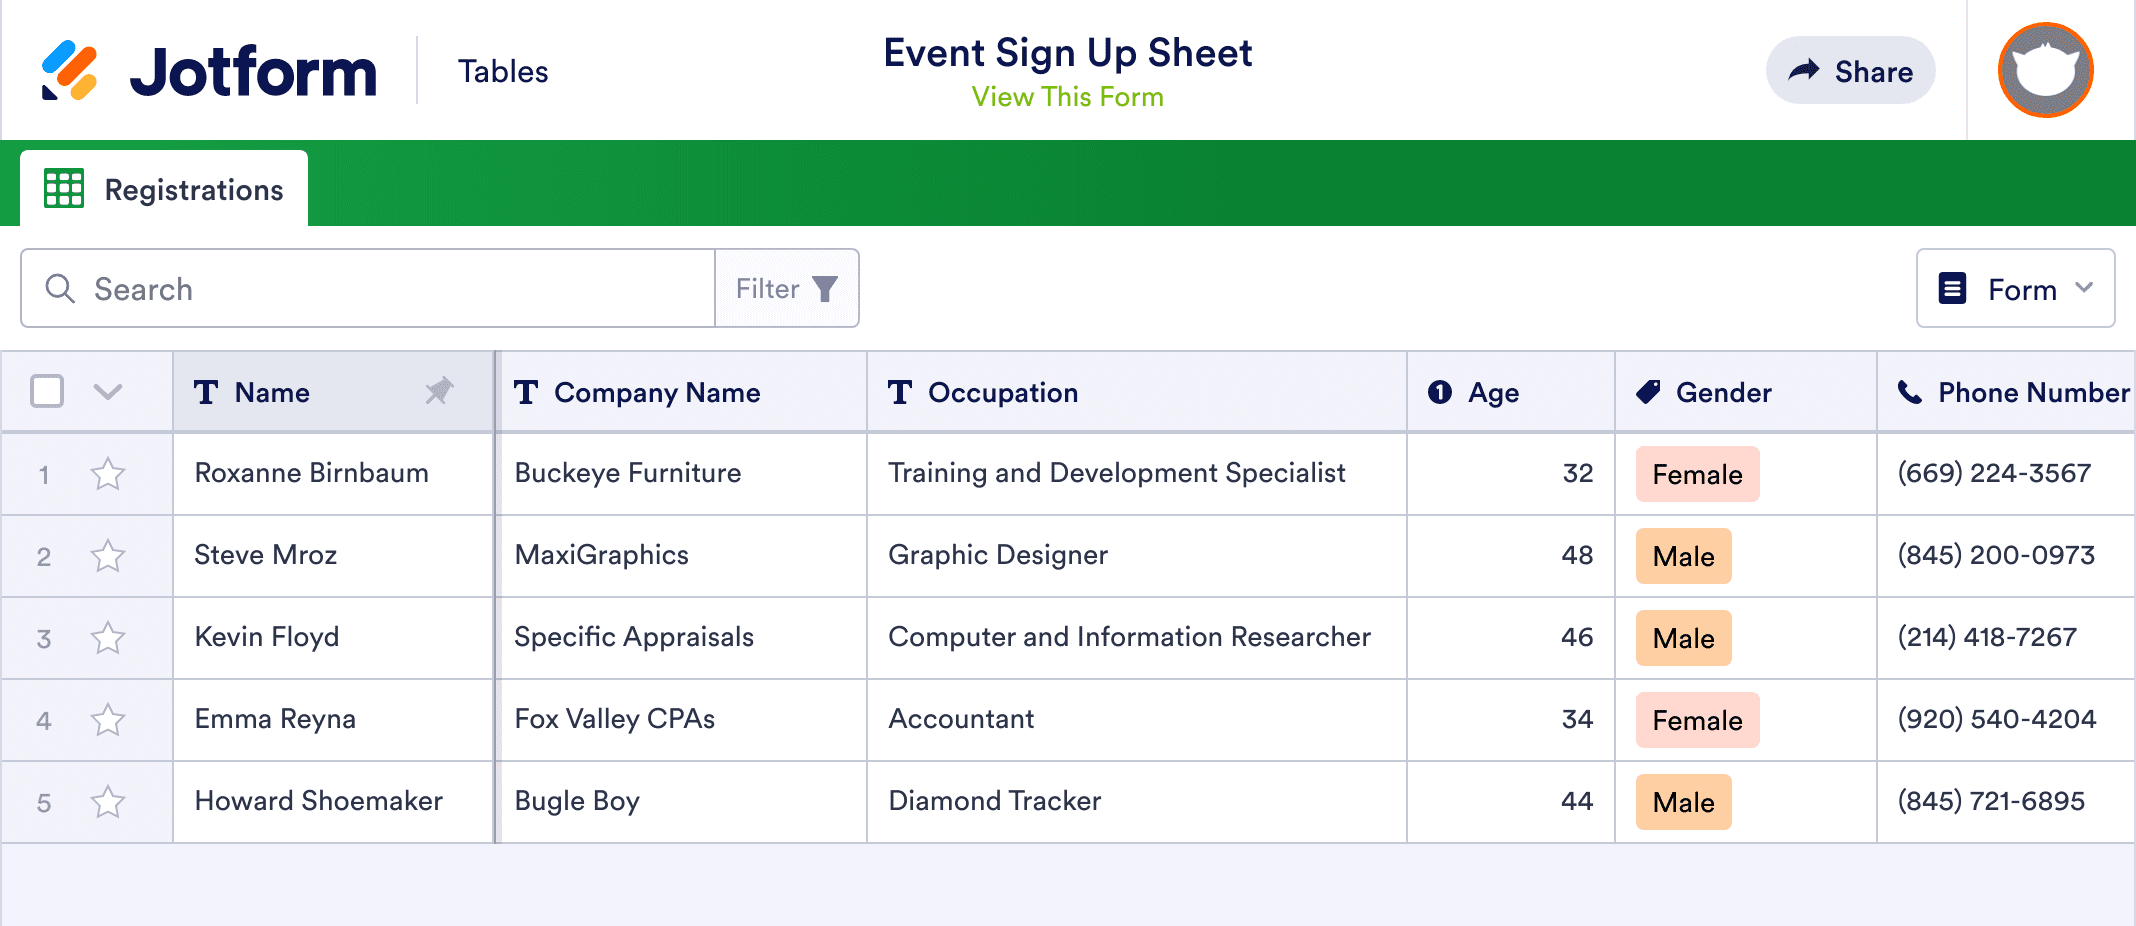 Event Sign Up Sheet